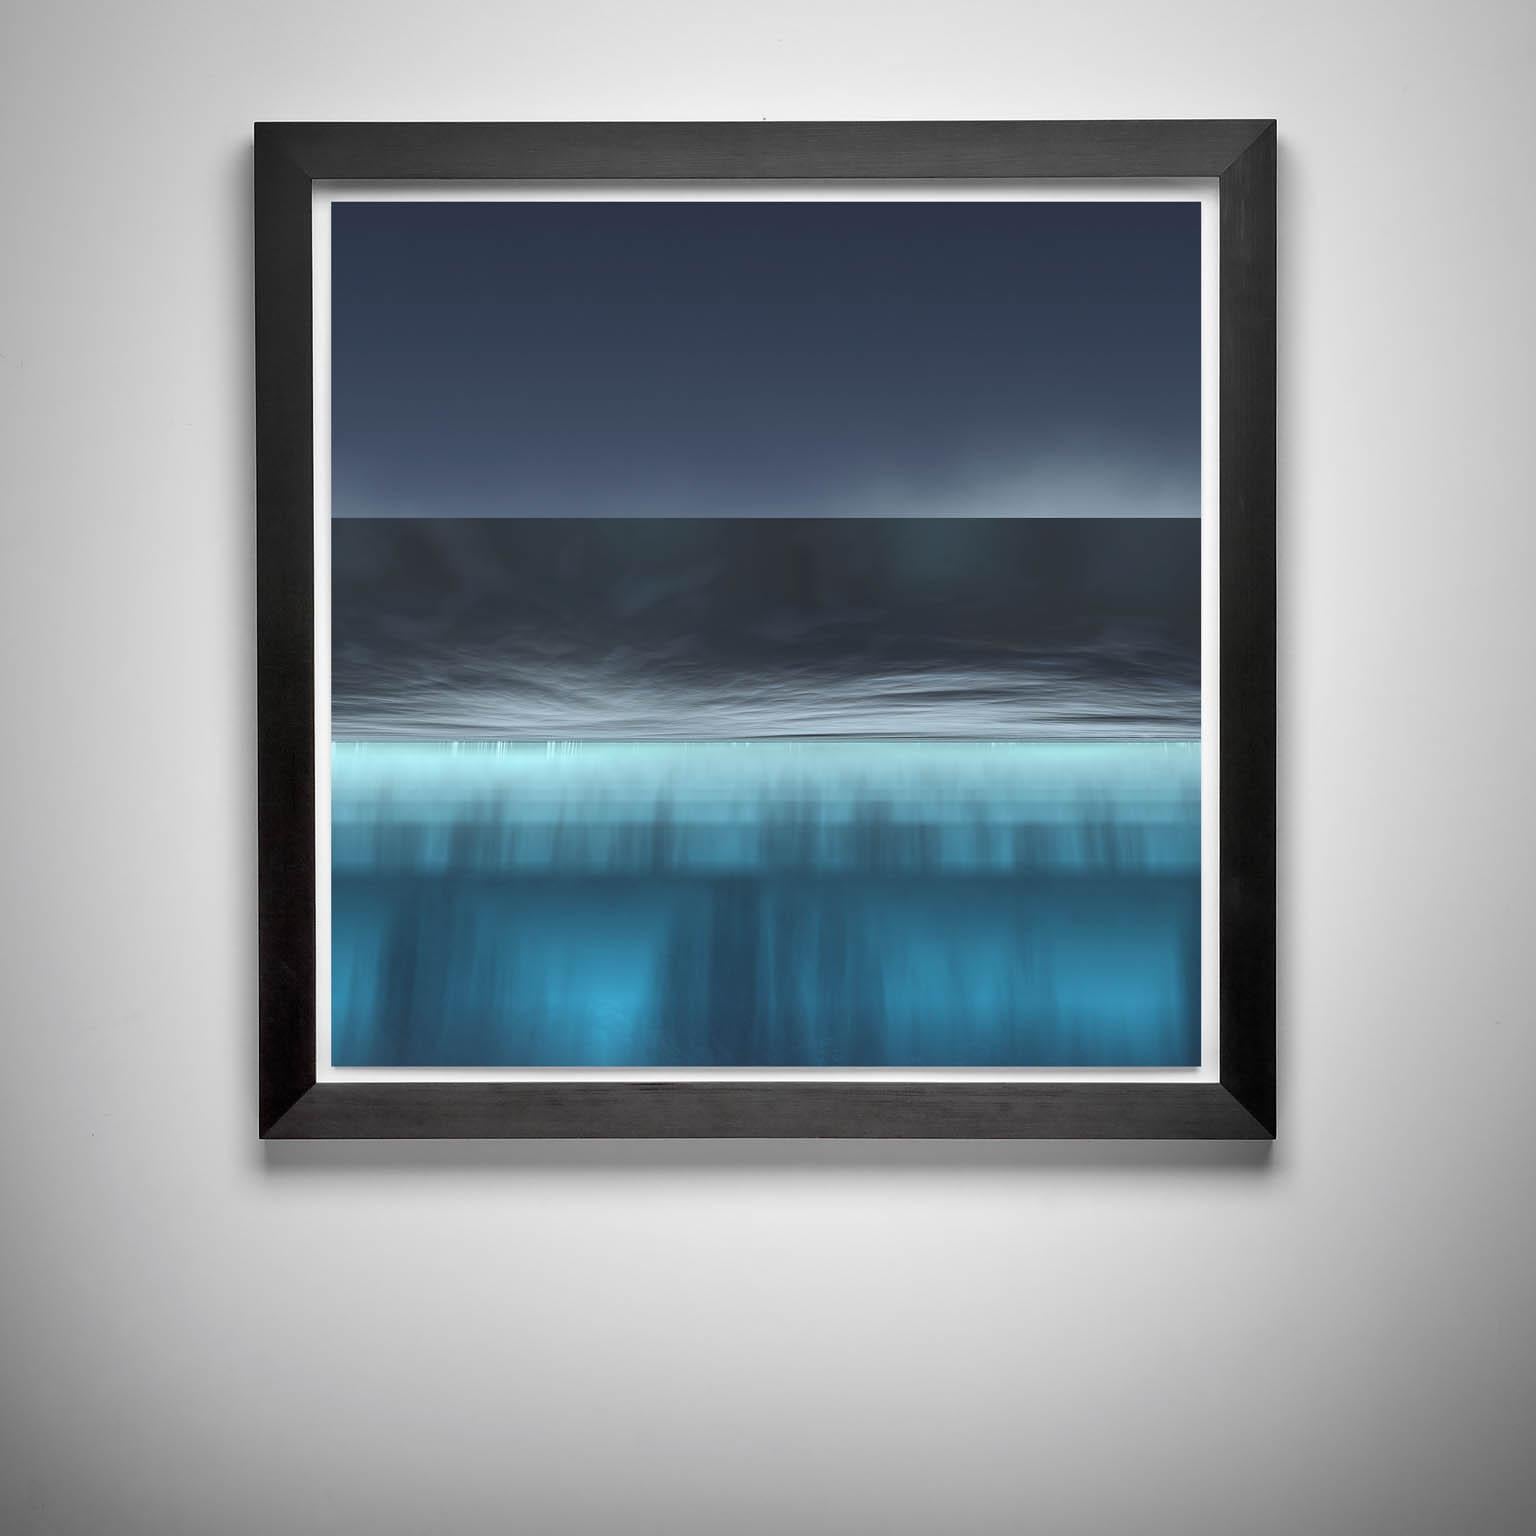 Ocean_Turquoise Default _3 /Ed. 200 (unframed) - Photograph by Paul-Émile Rioux